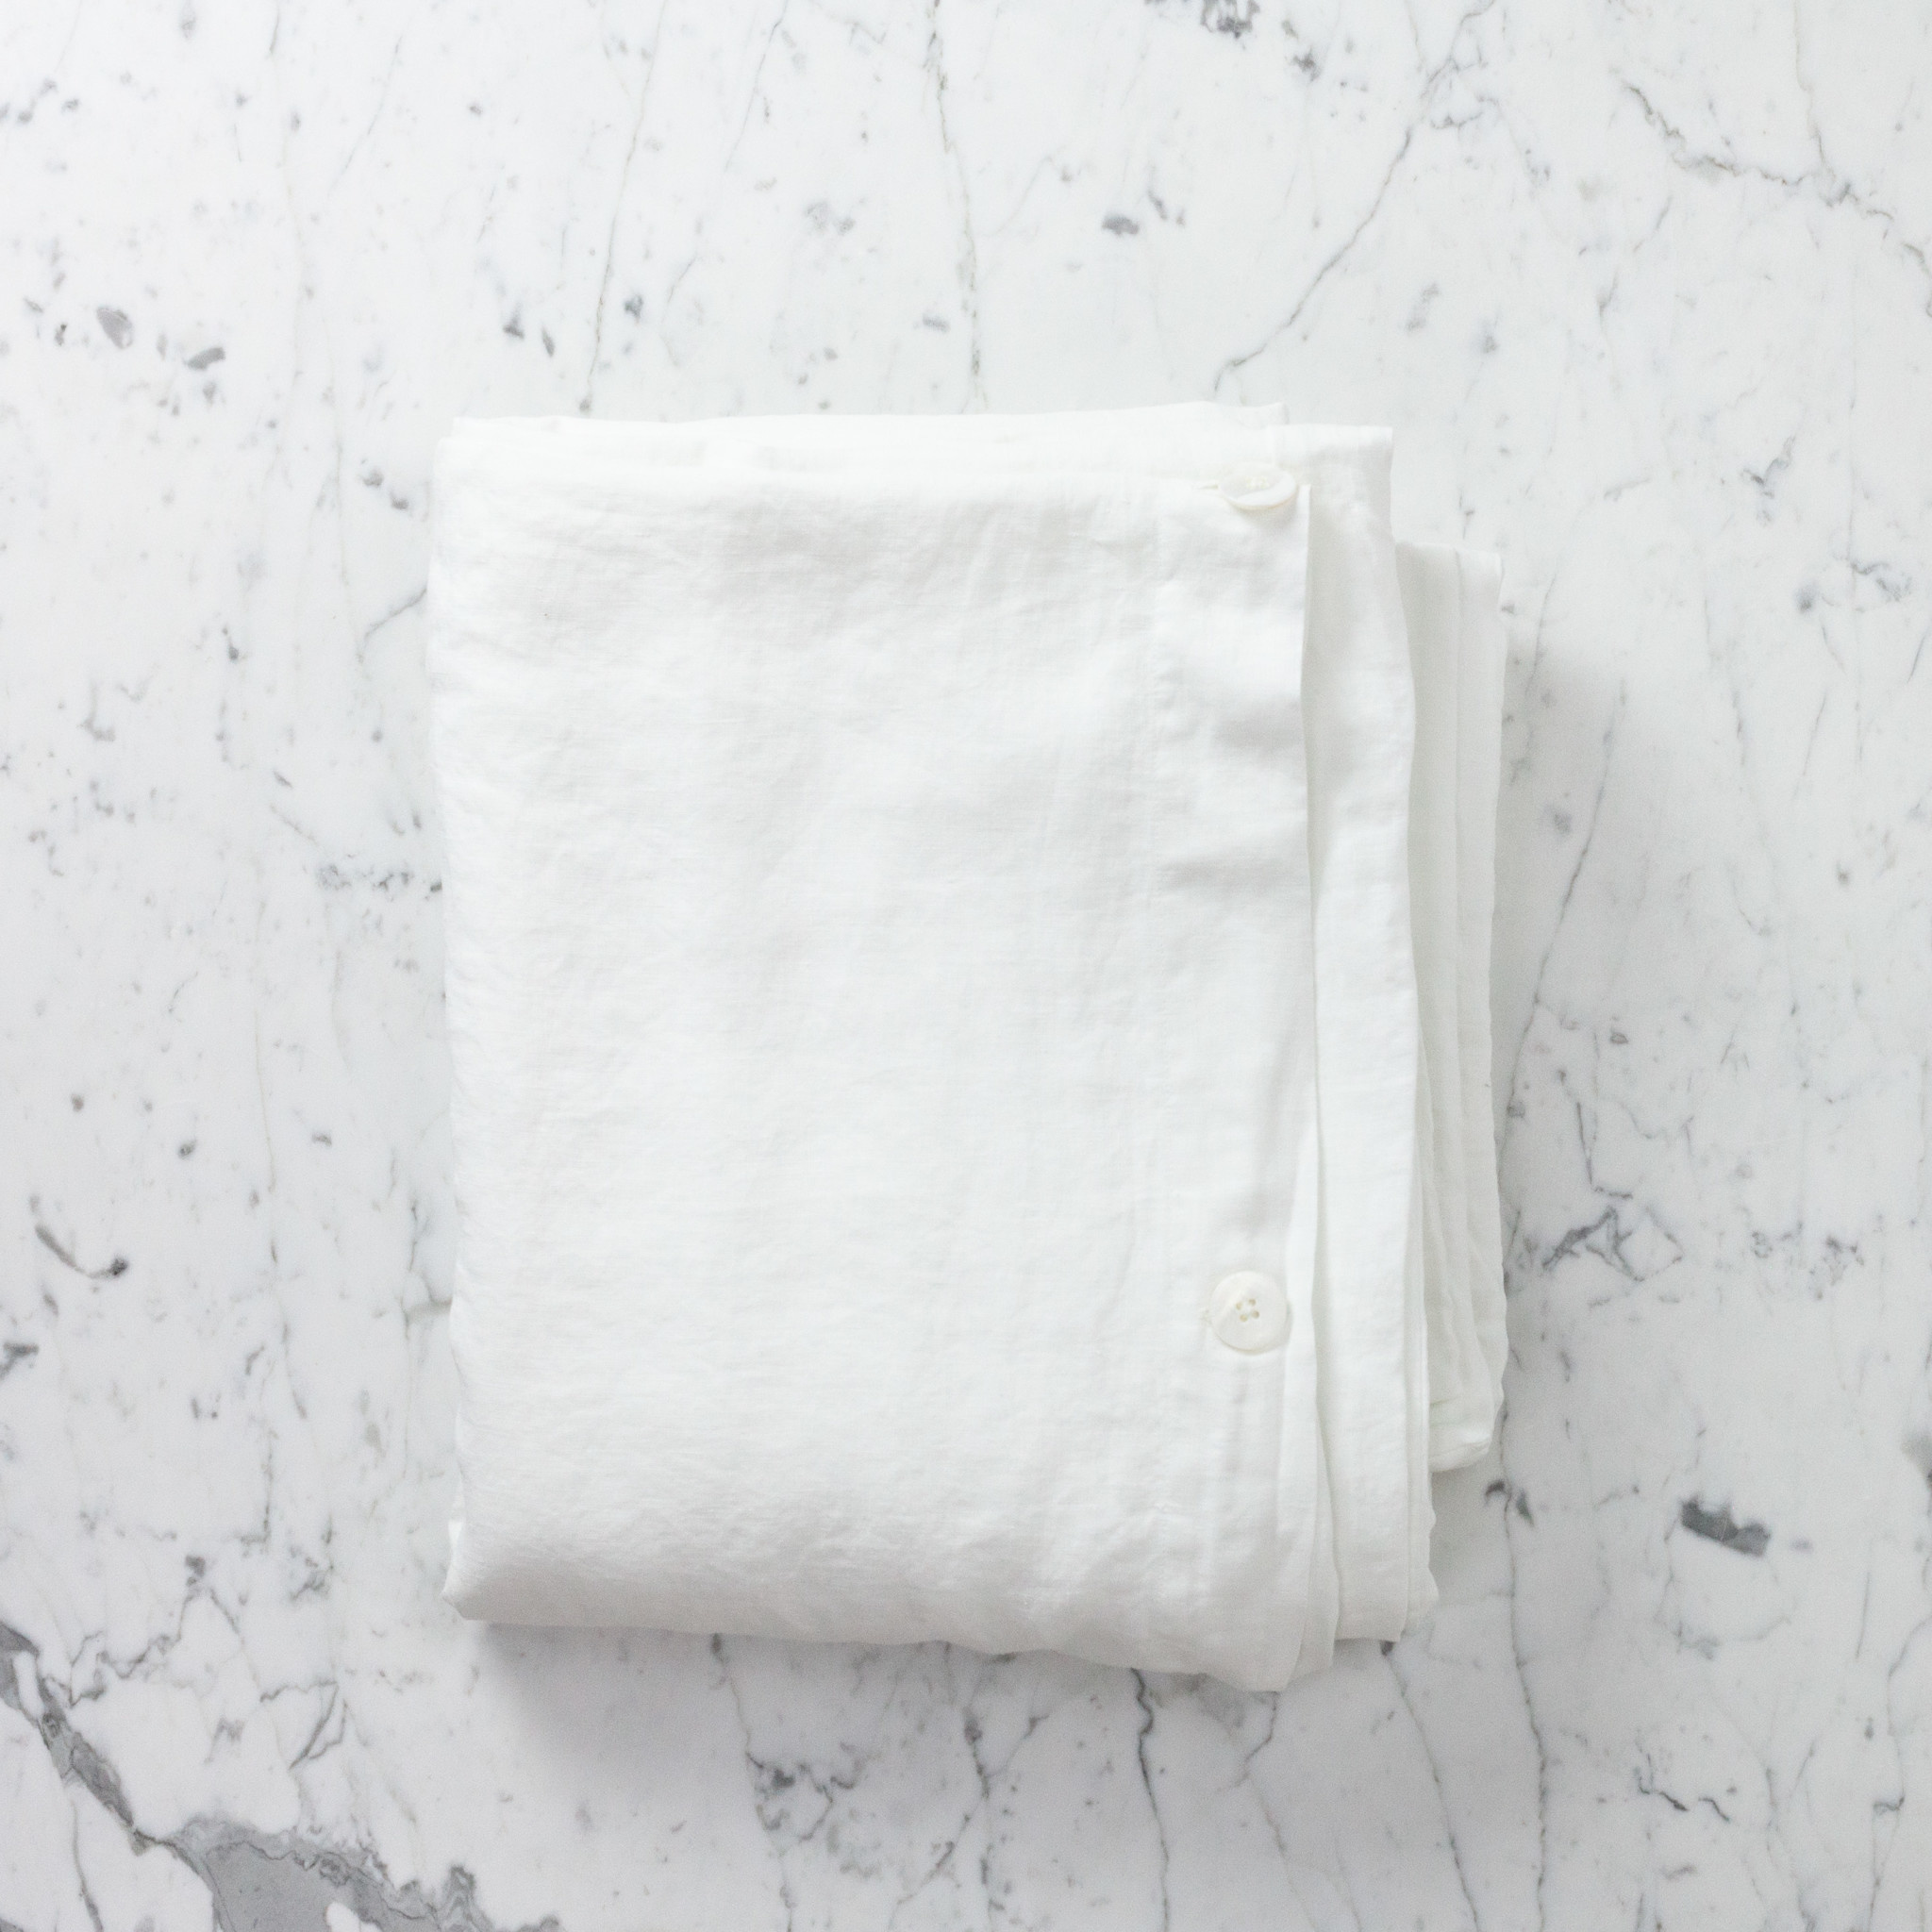 Linen Duvet Cover - Queen - White - 91" x 93"